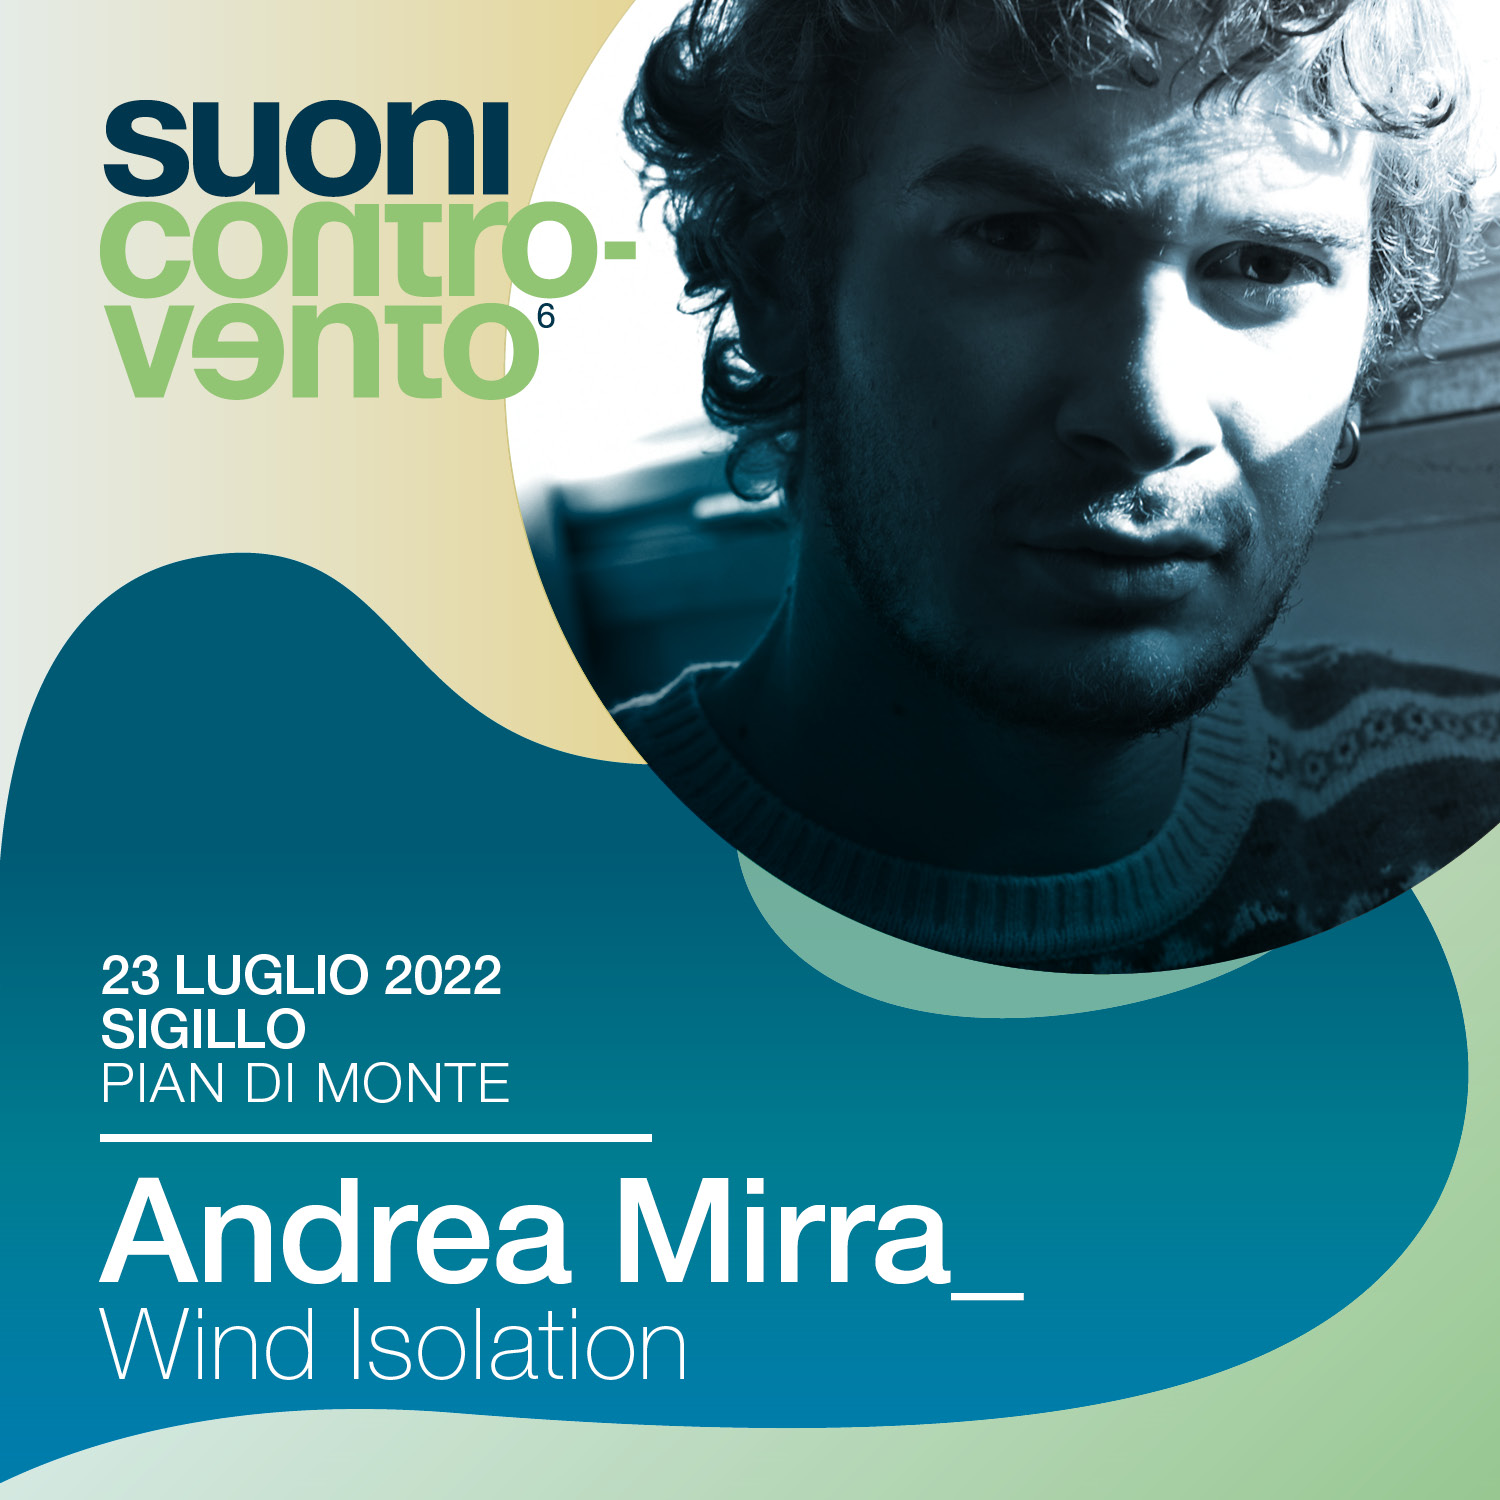 ANDREA MIRRA – Wind Isolation